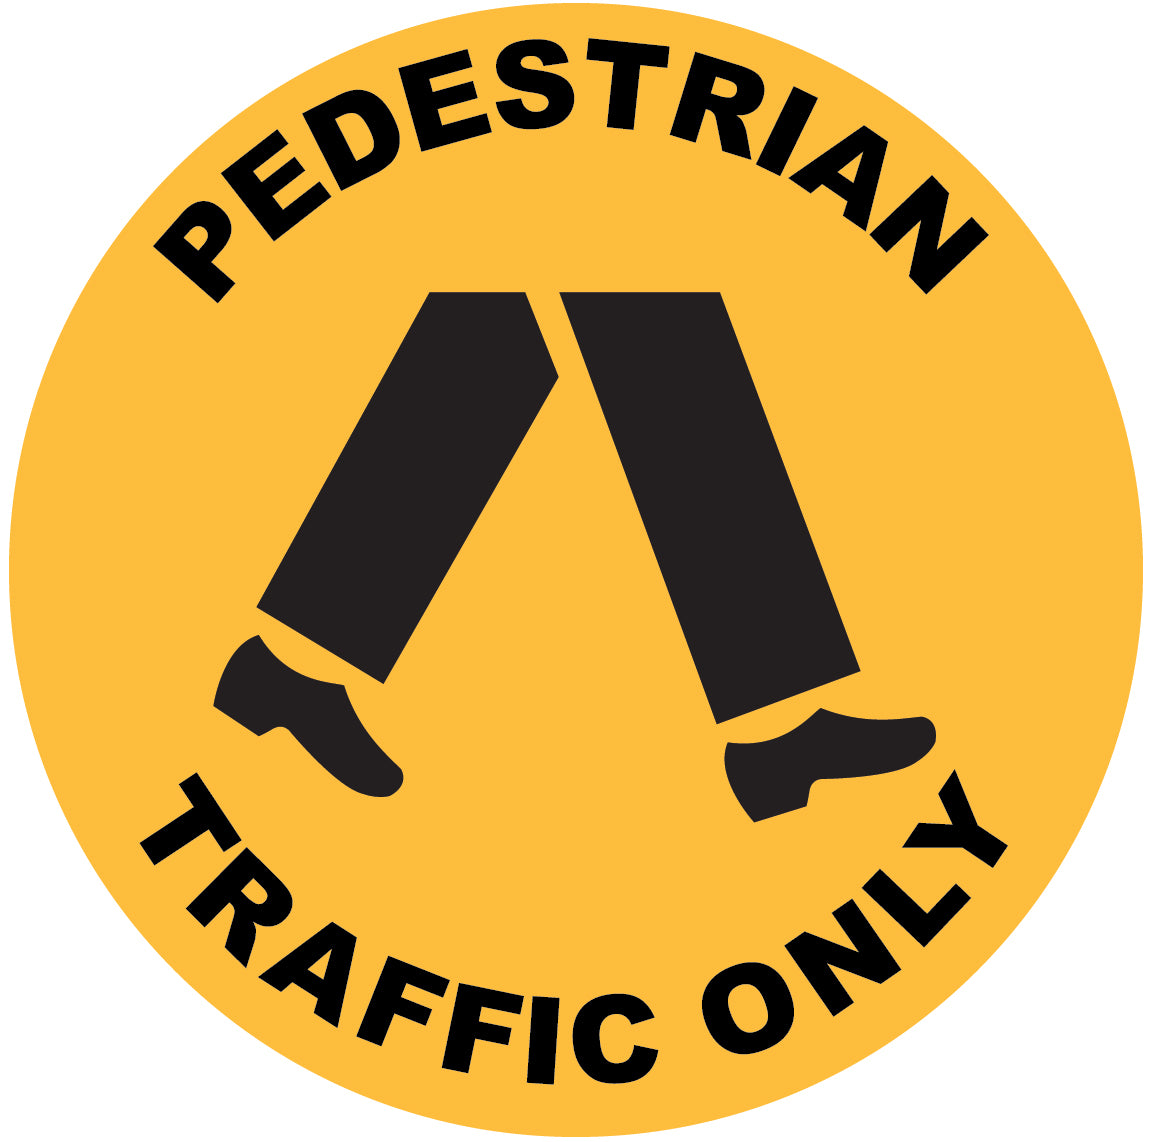 Pedestrian Traffic Only Decal